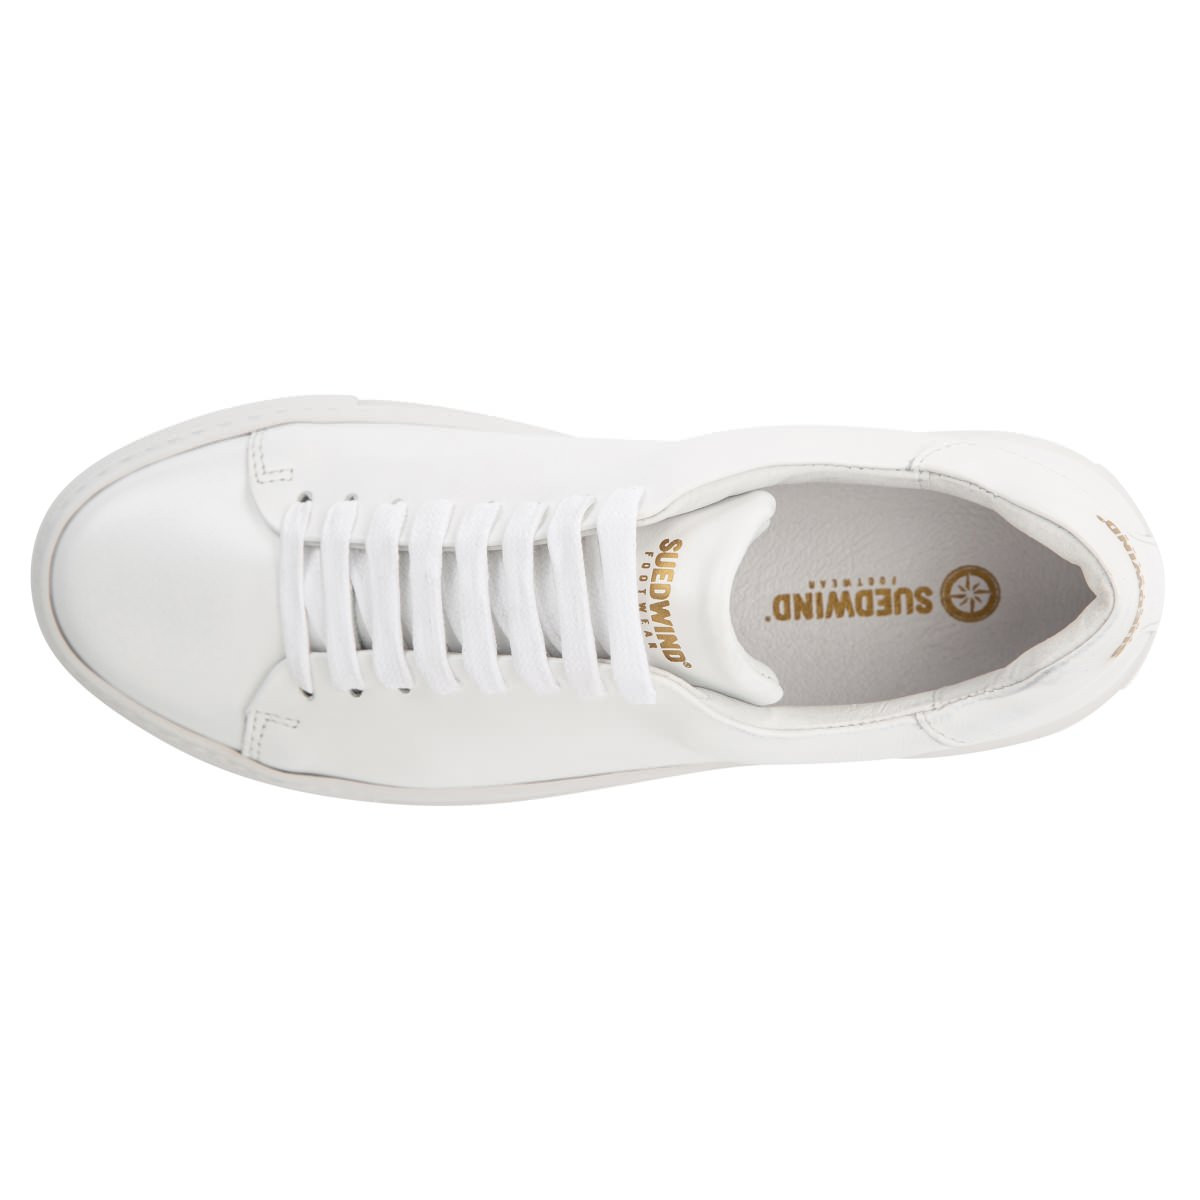 Suedwind-Ashton-Leather-Leder-Sneaker-Schuhe-Boots-White-Weiss-10170011-05_1280x1280 (1)